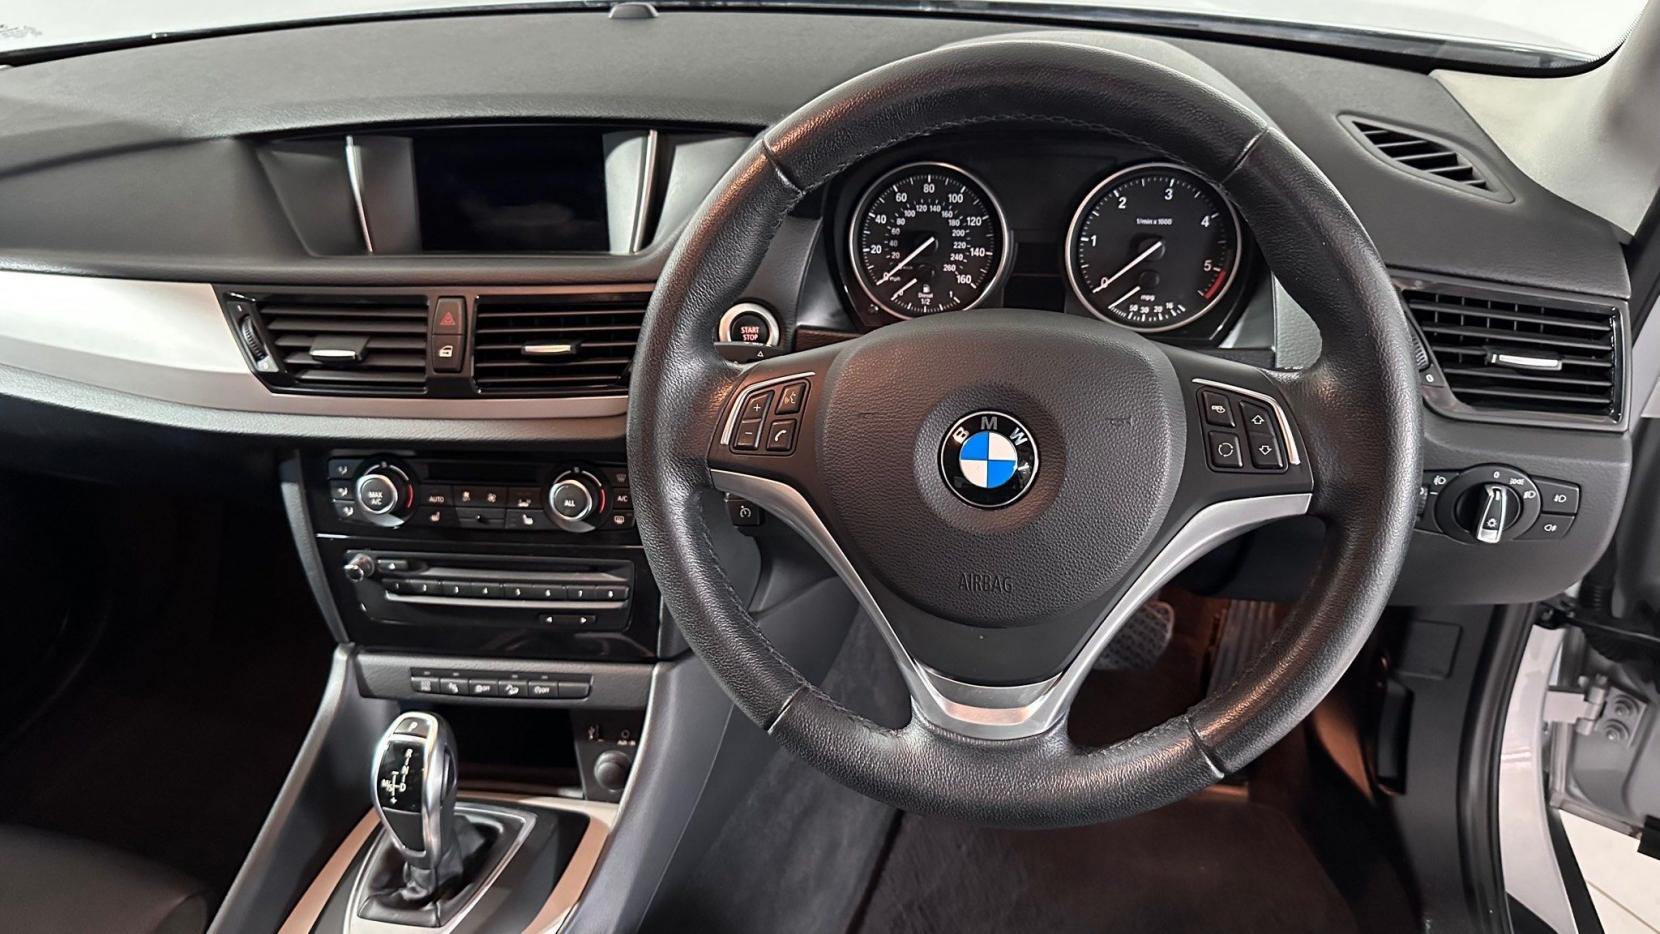 BMW X1 2.0 18d SE Auto xDrive Euro 5 (s/s) 5dr